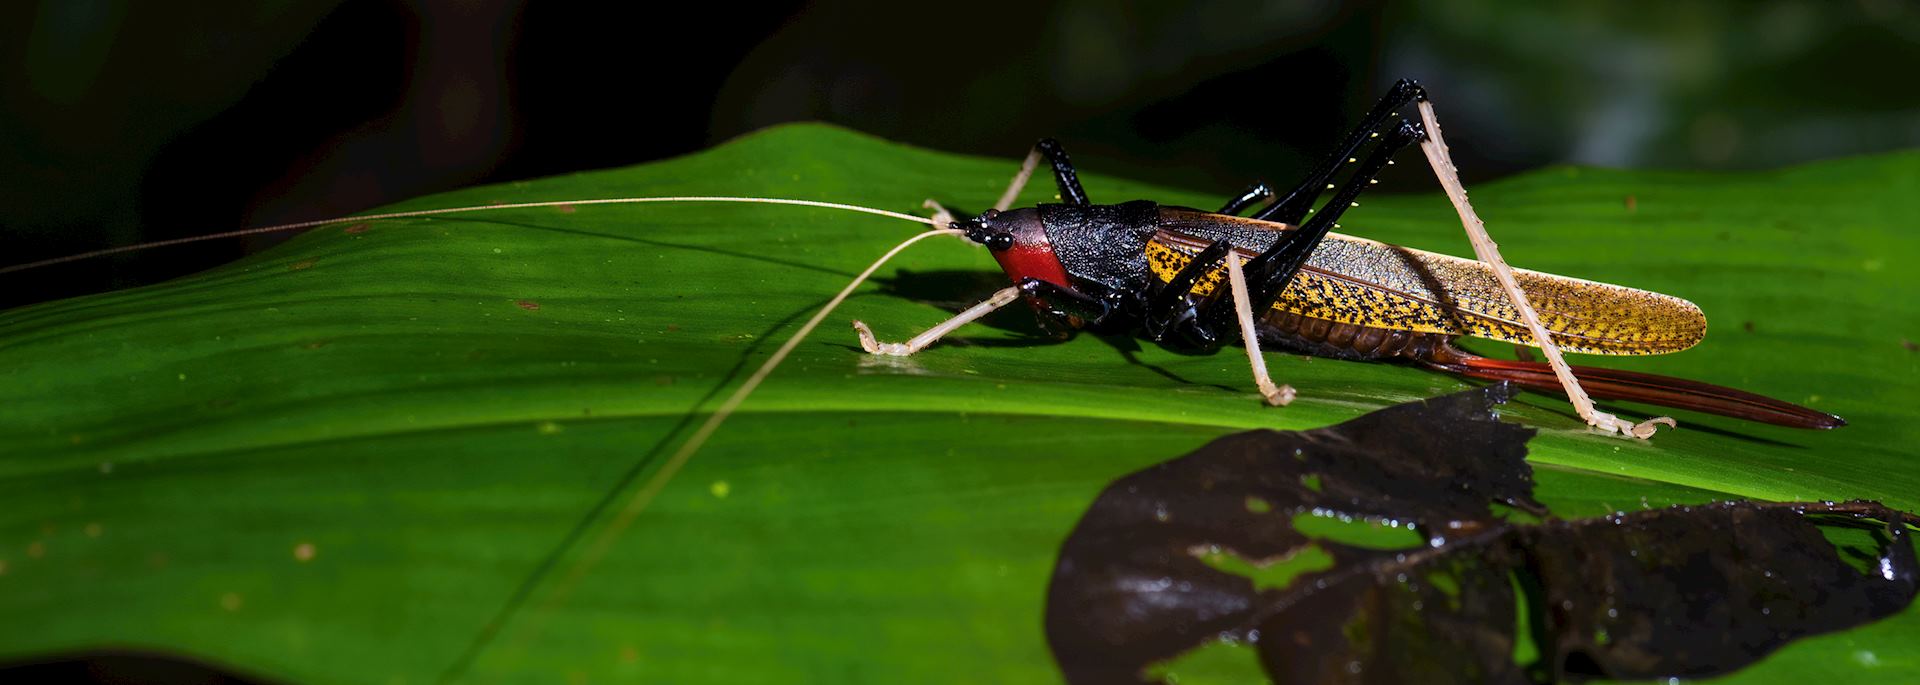 Katydids cricket, Taman Negara National Park